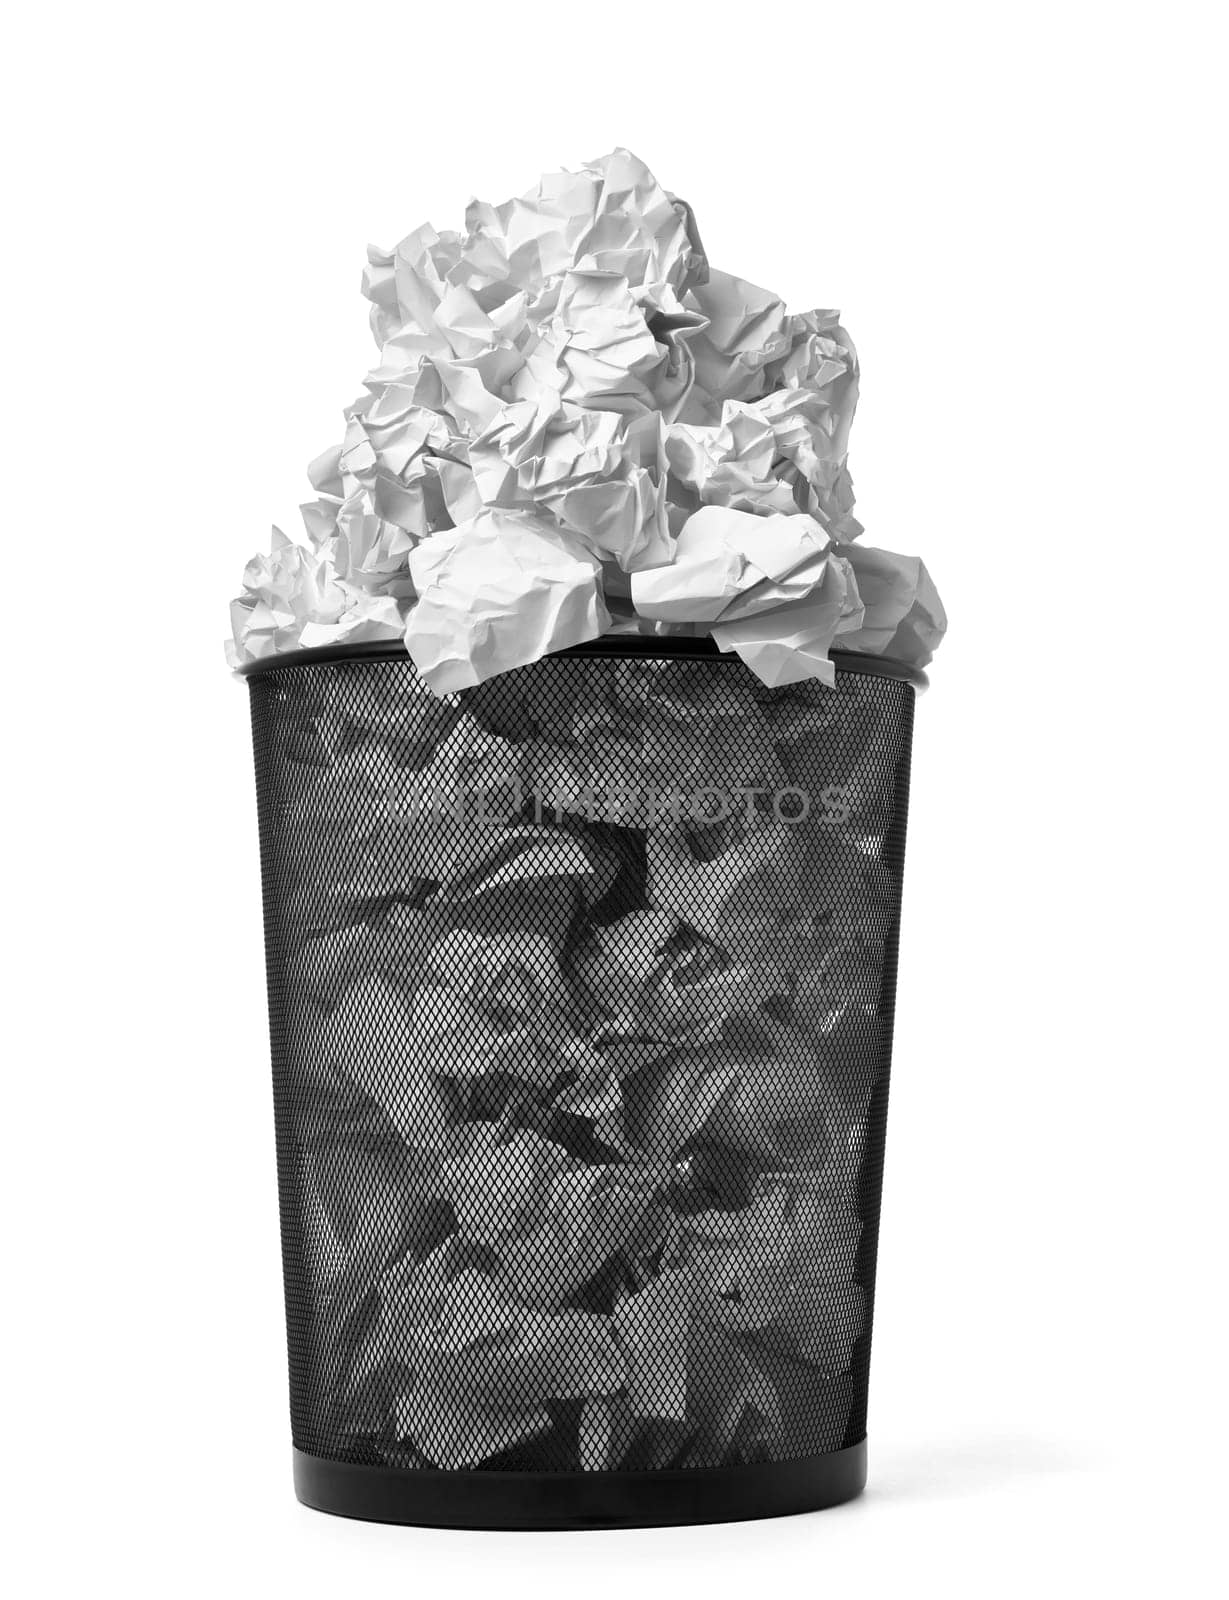 paper ball trash bin rubbish garbage wastepaper by Picsfive